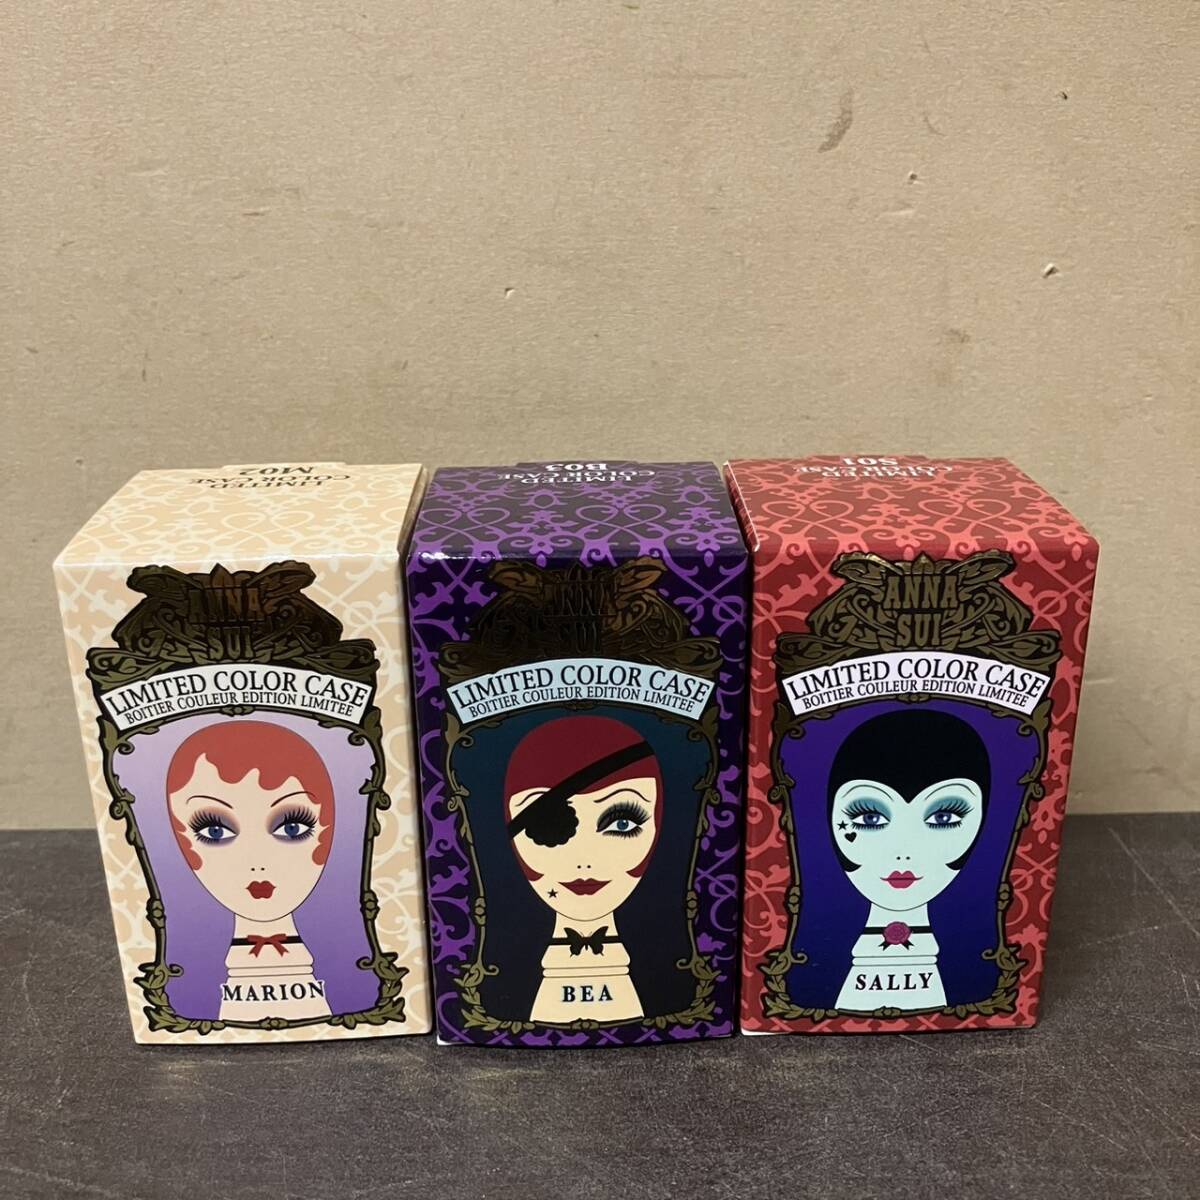 [5-50] limitation ANNA SUI Anna Sui Dolly head color case limited color case S01 M02 B03 3. set MARION SALLY BEA case 